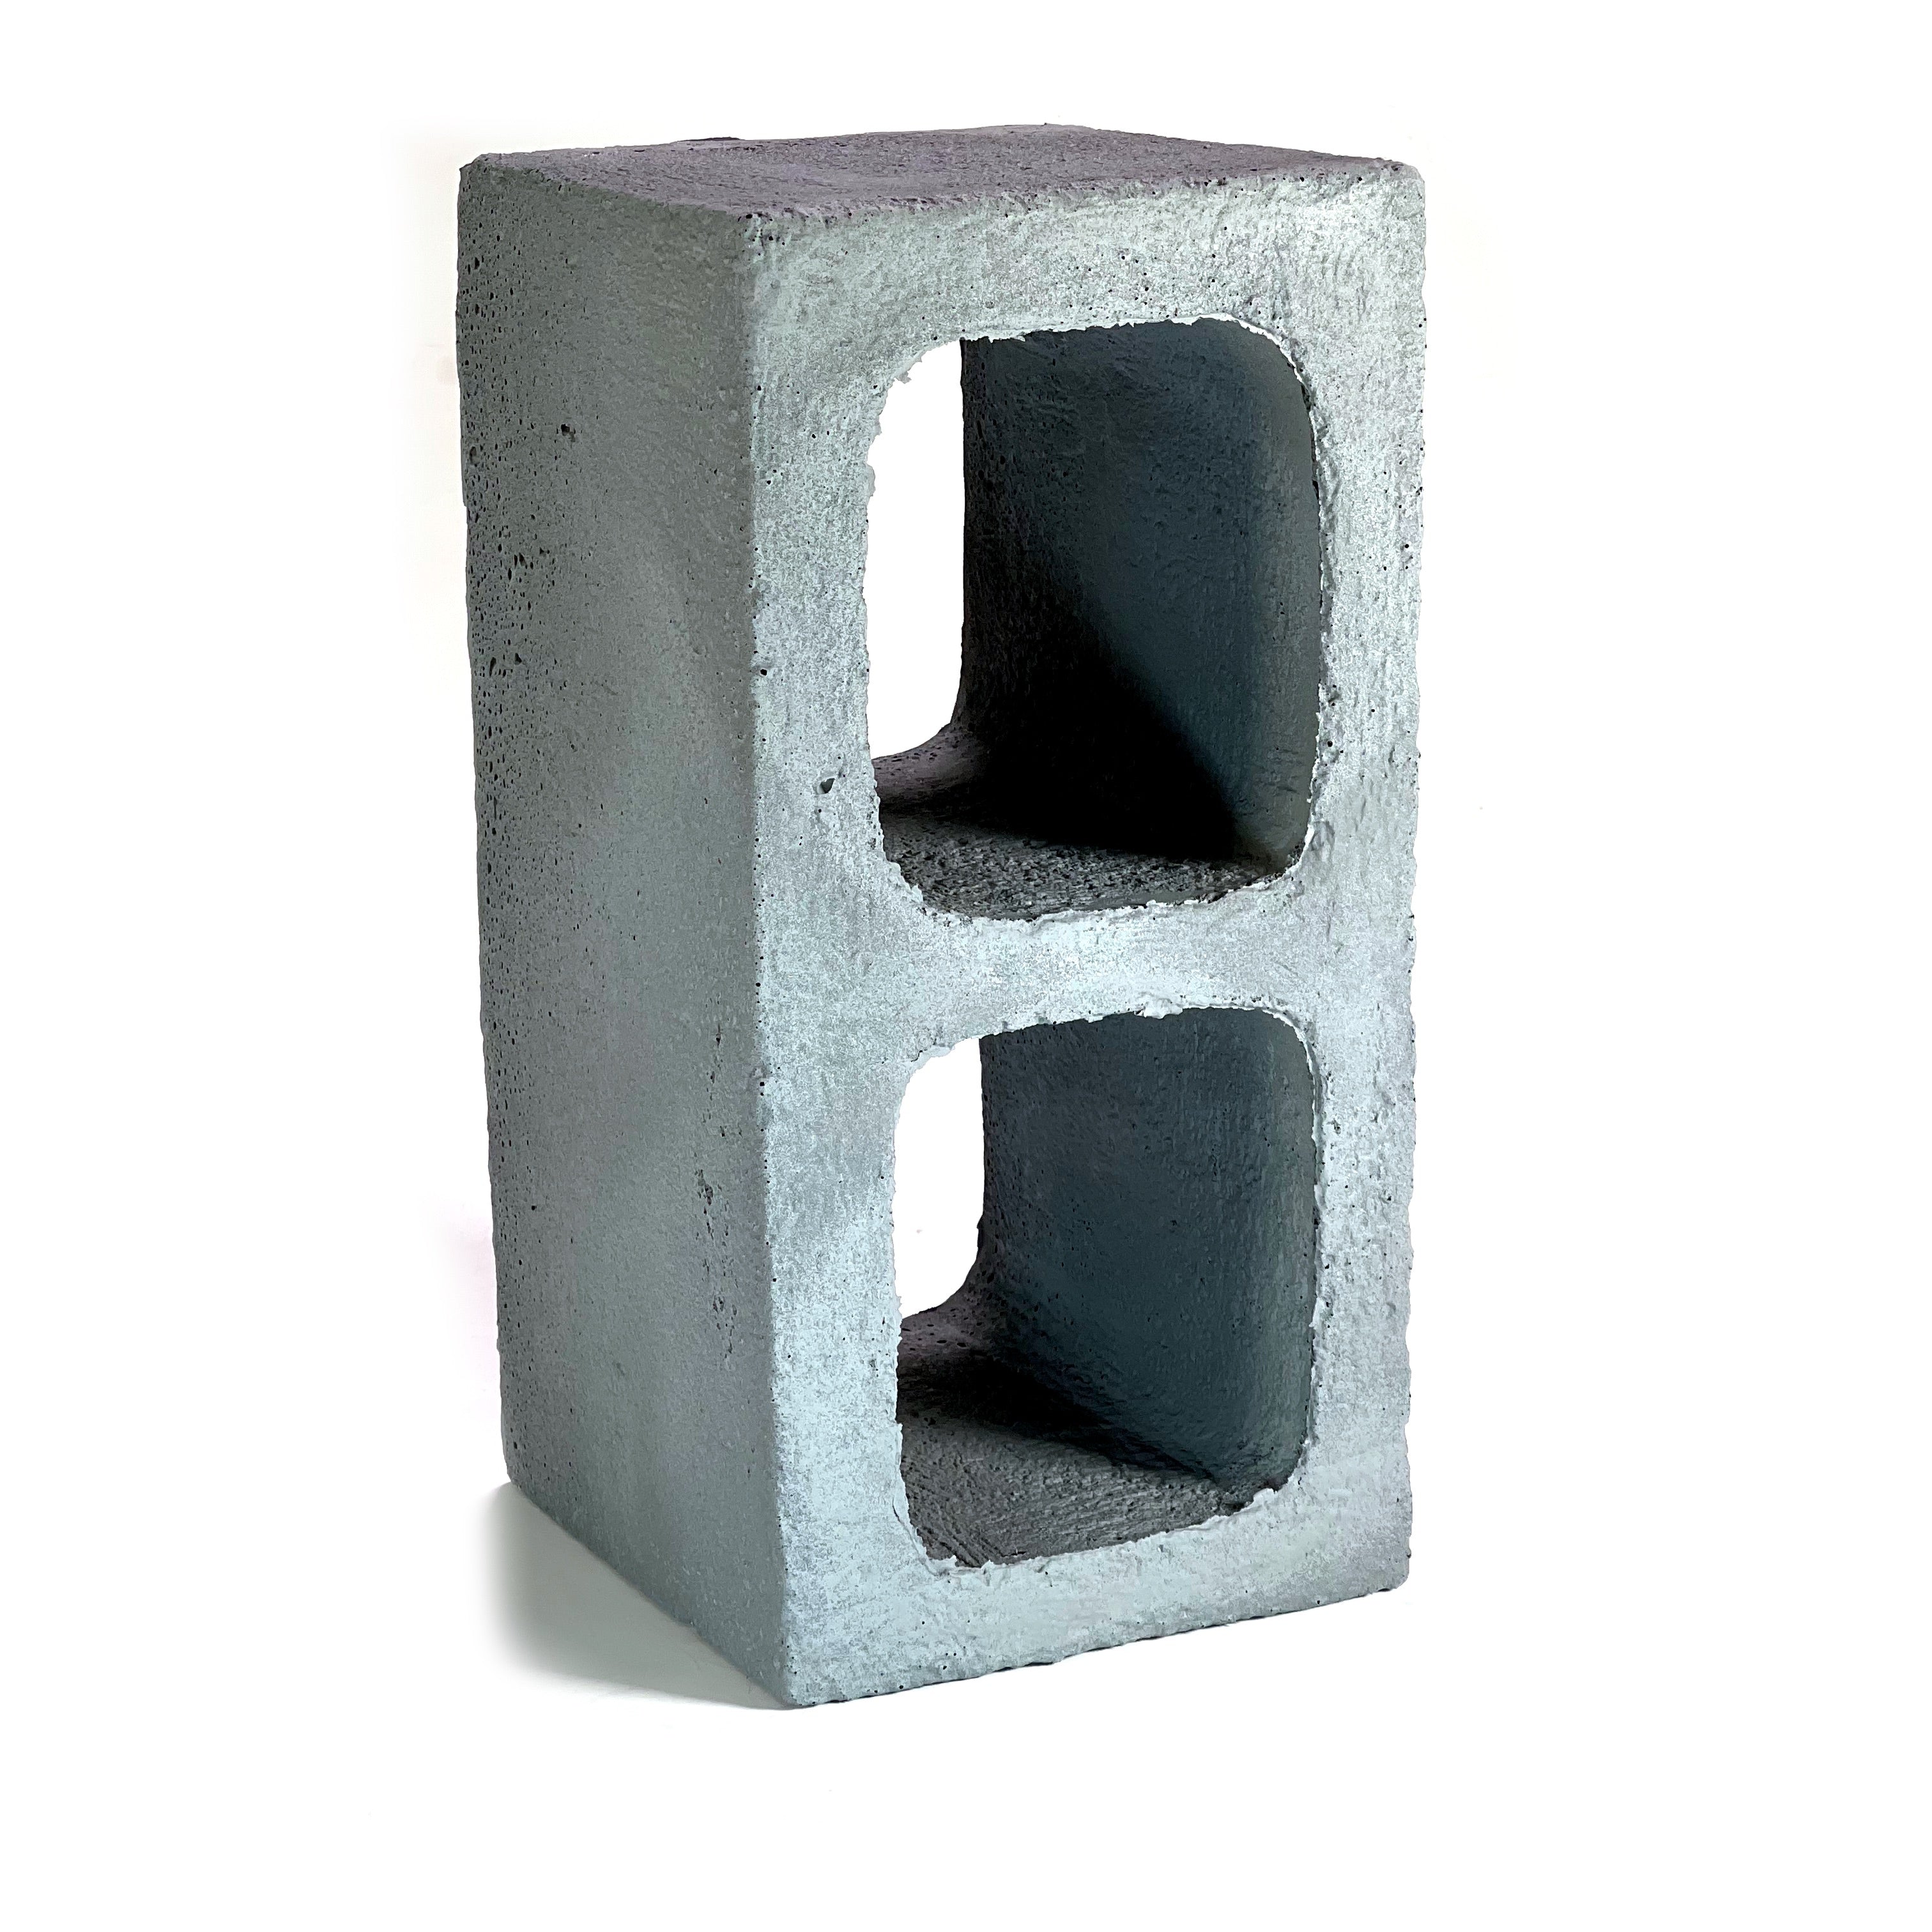 Flexible Soft Urethane Foam Rubber Cement Cinder Block Replica Prop - GREY